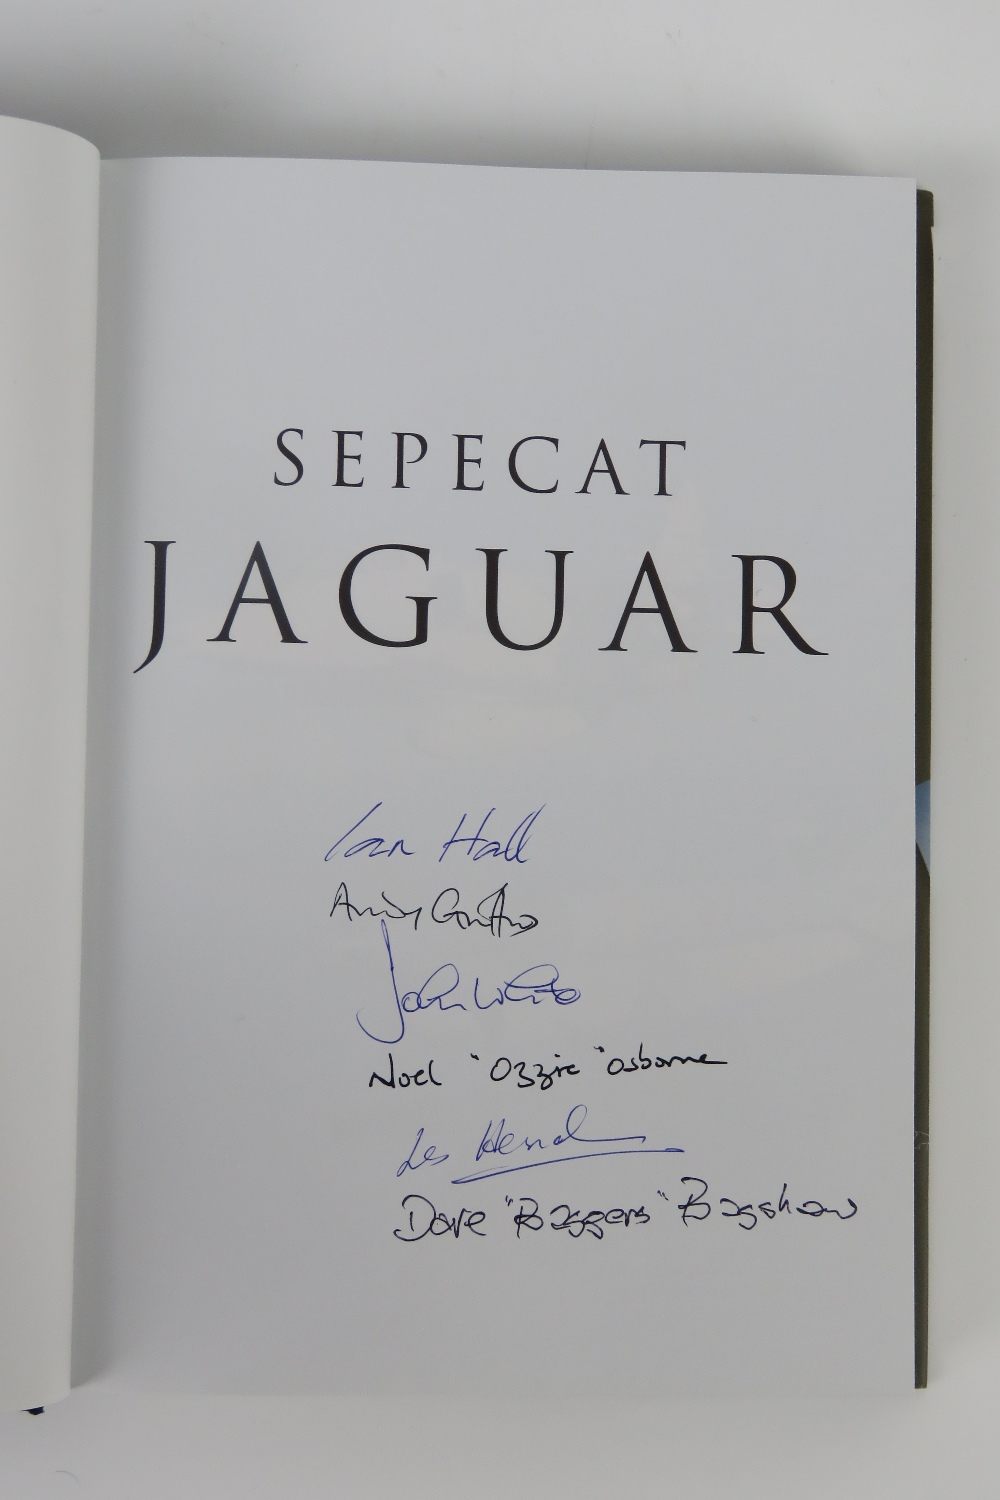 Sepecat Jaguar; three signed books on the Jaguar fighter jet, - Image 3 of 4